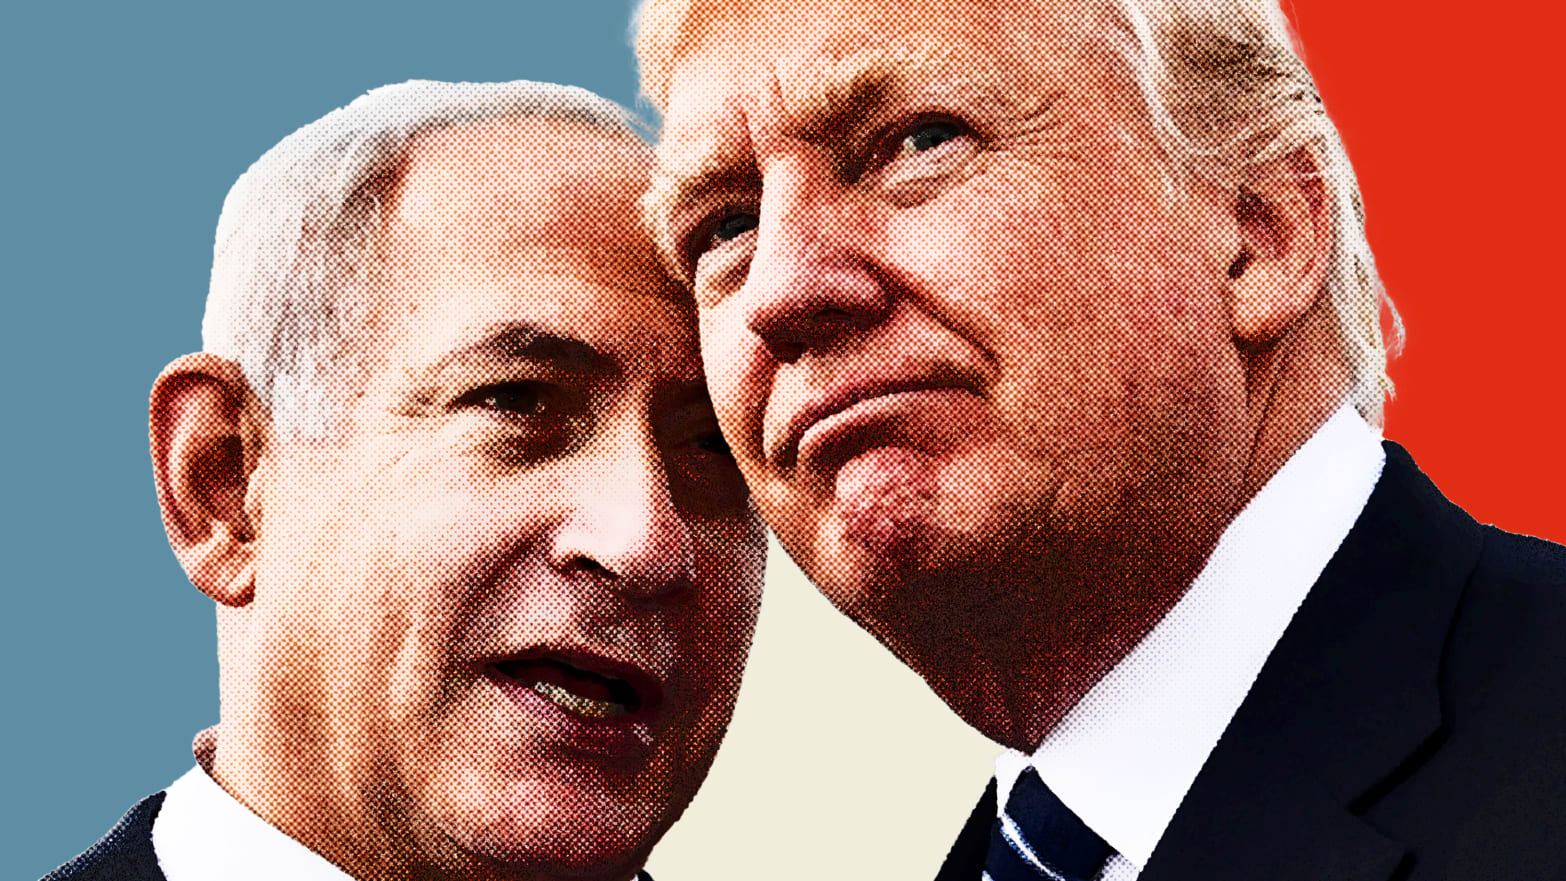 Photo illustration of Benjamin Netanyahu of Israel and Donald Trump